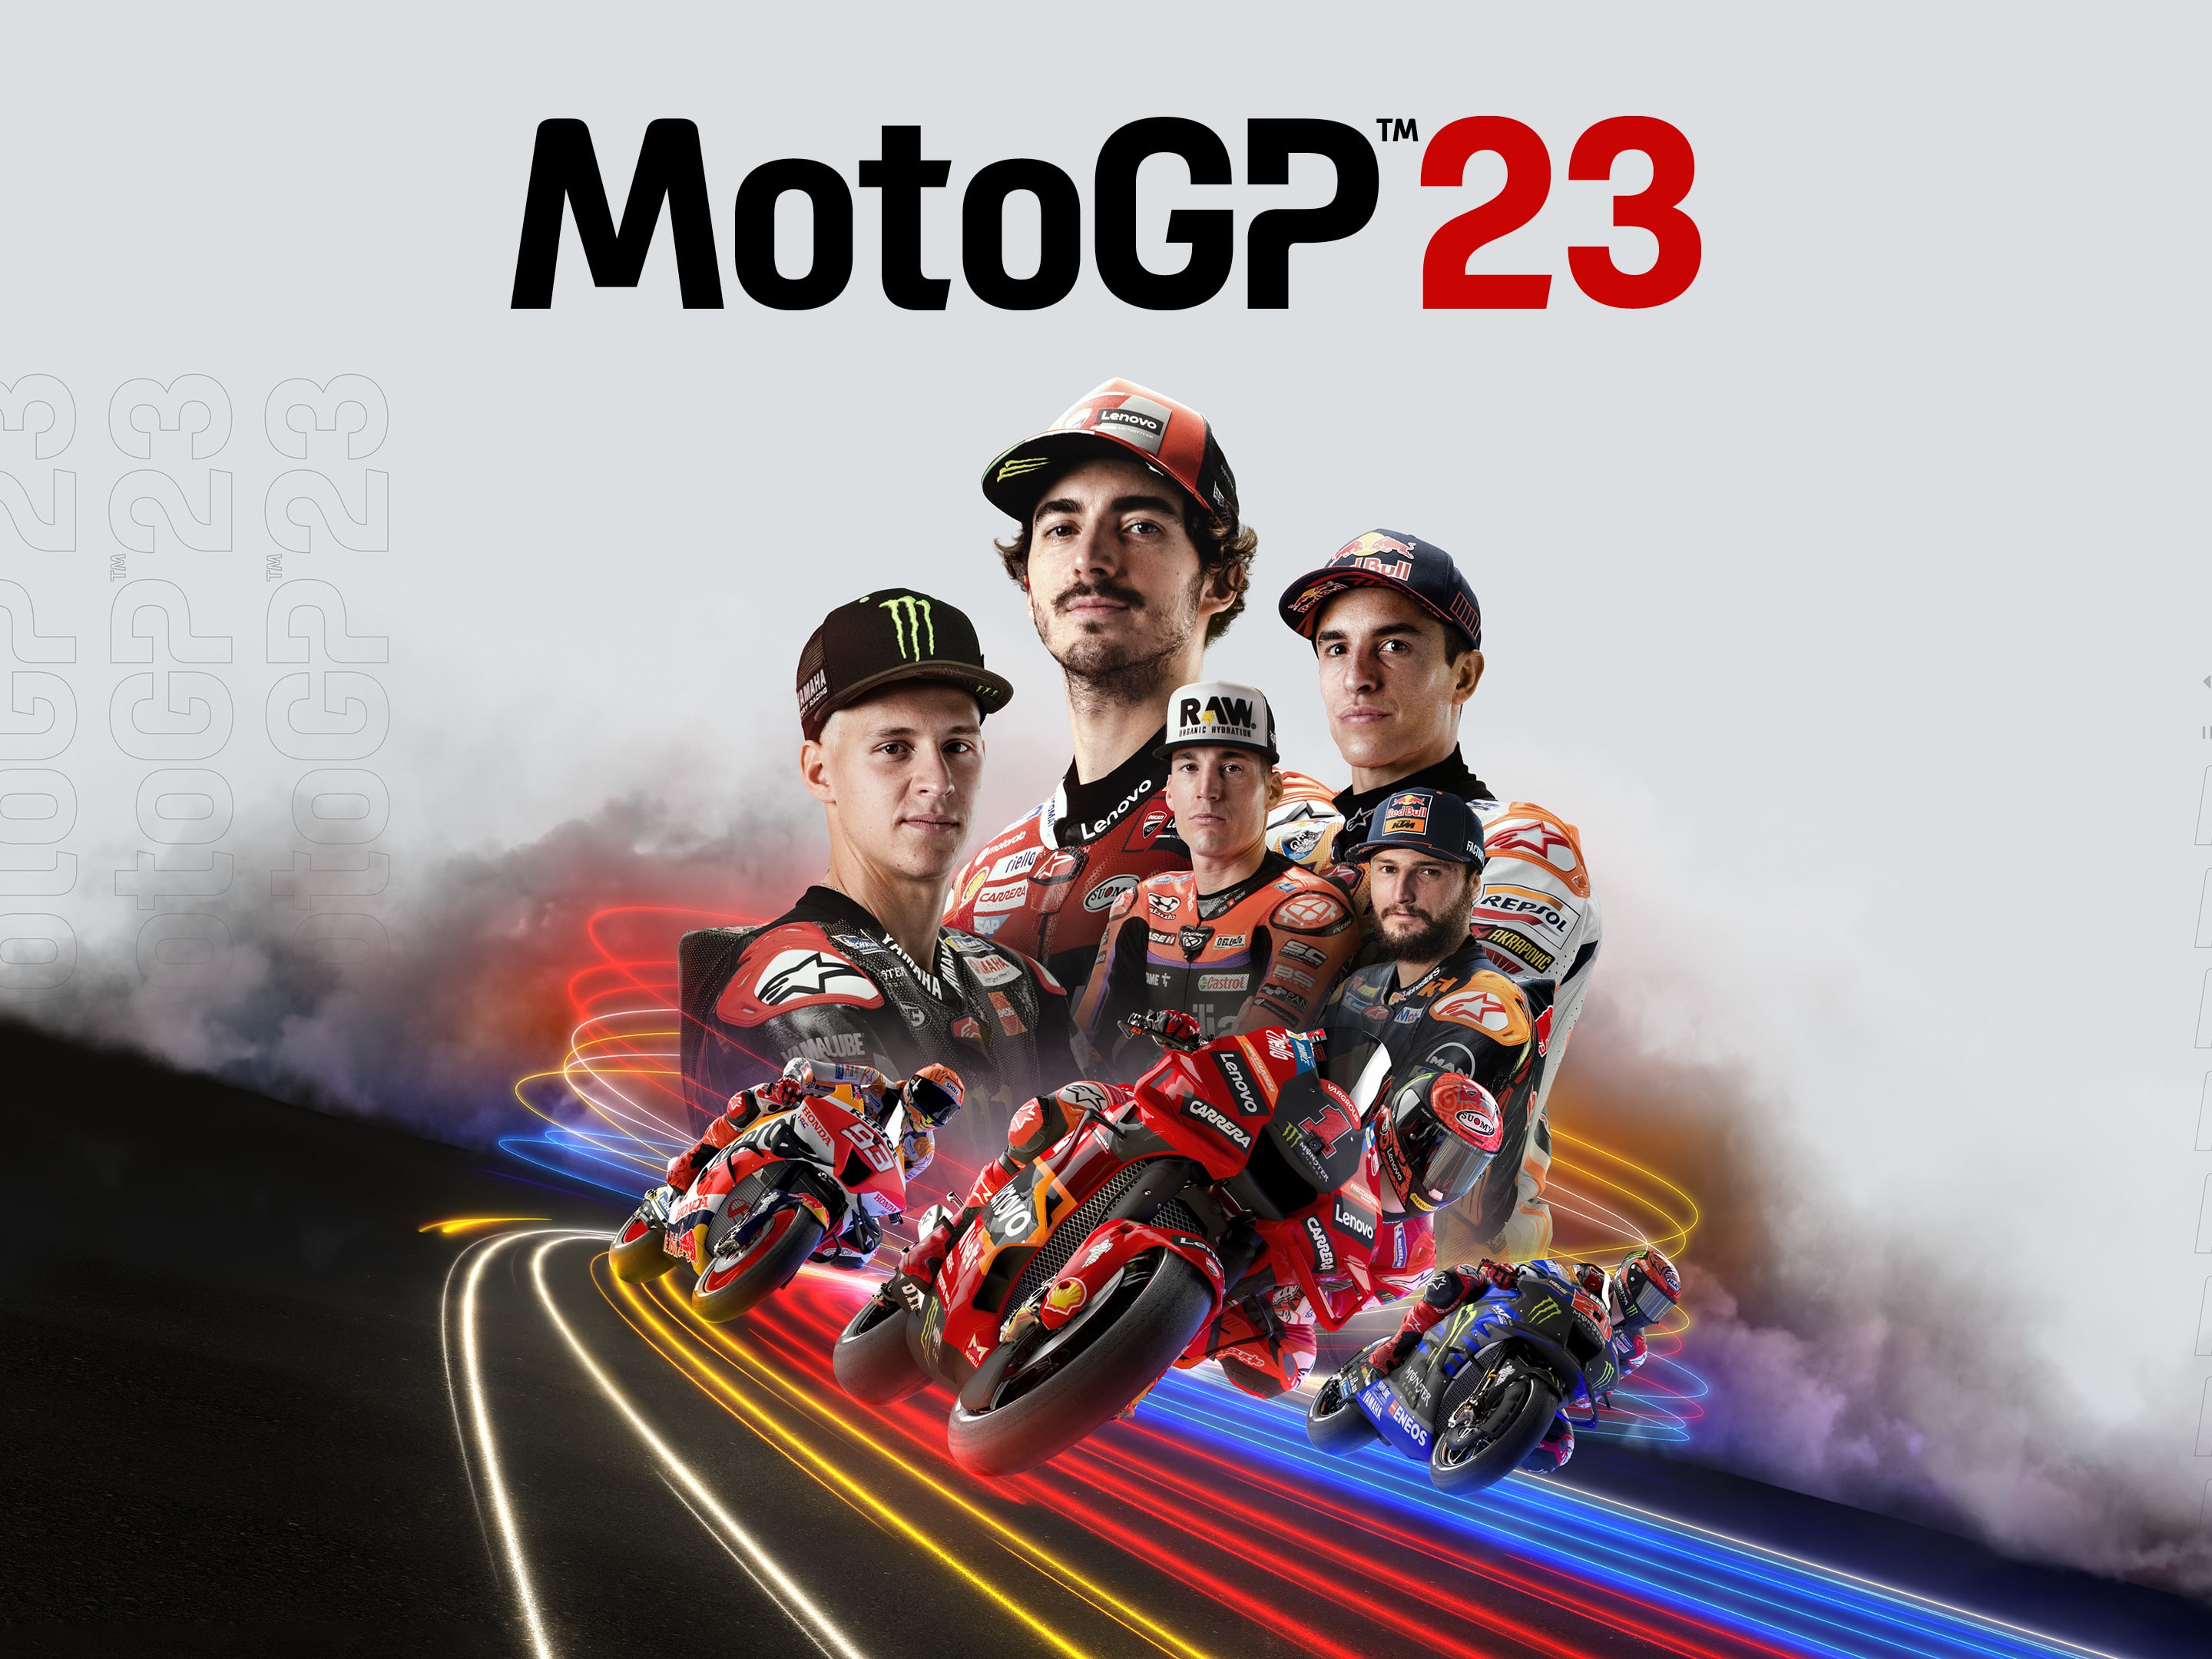 MotoGP™23 PS4 & PS5